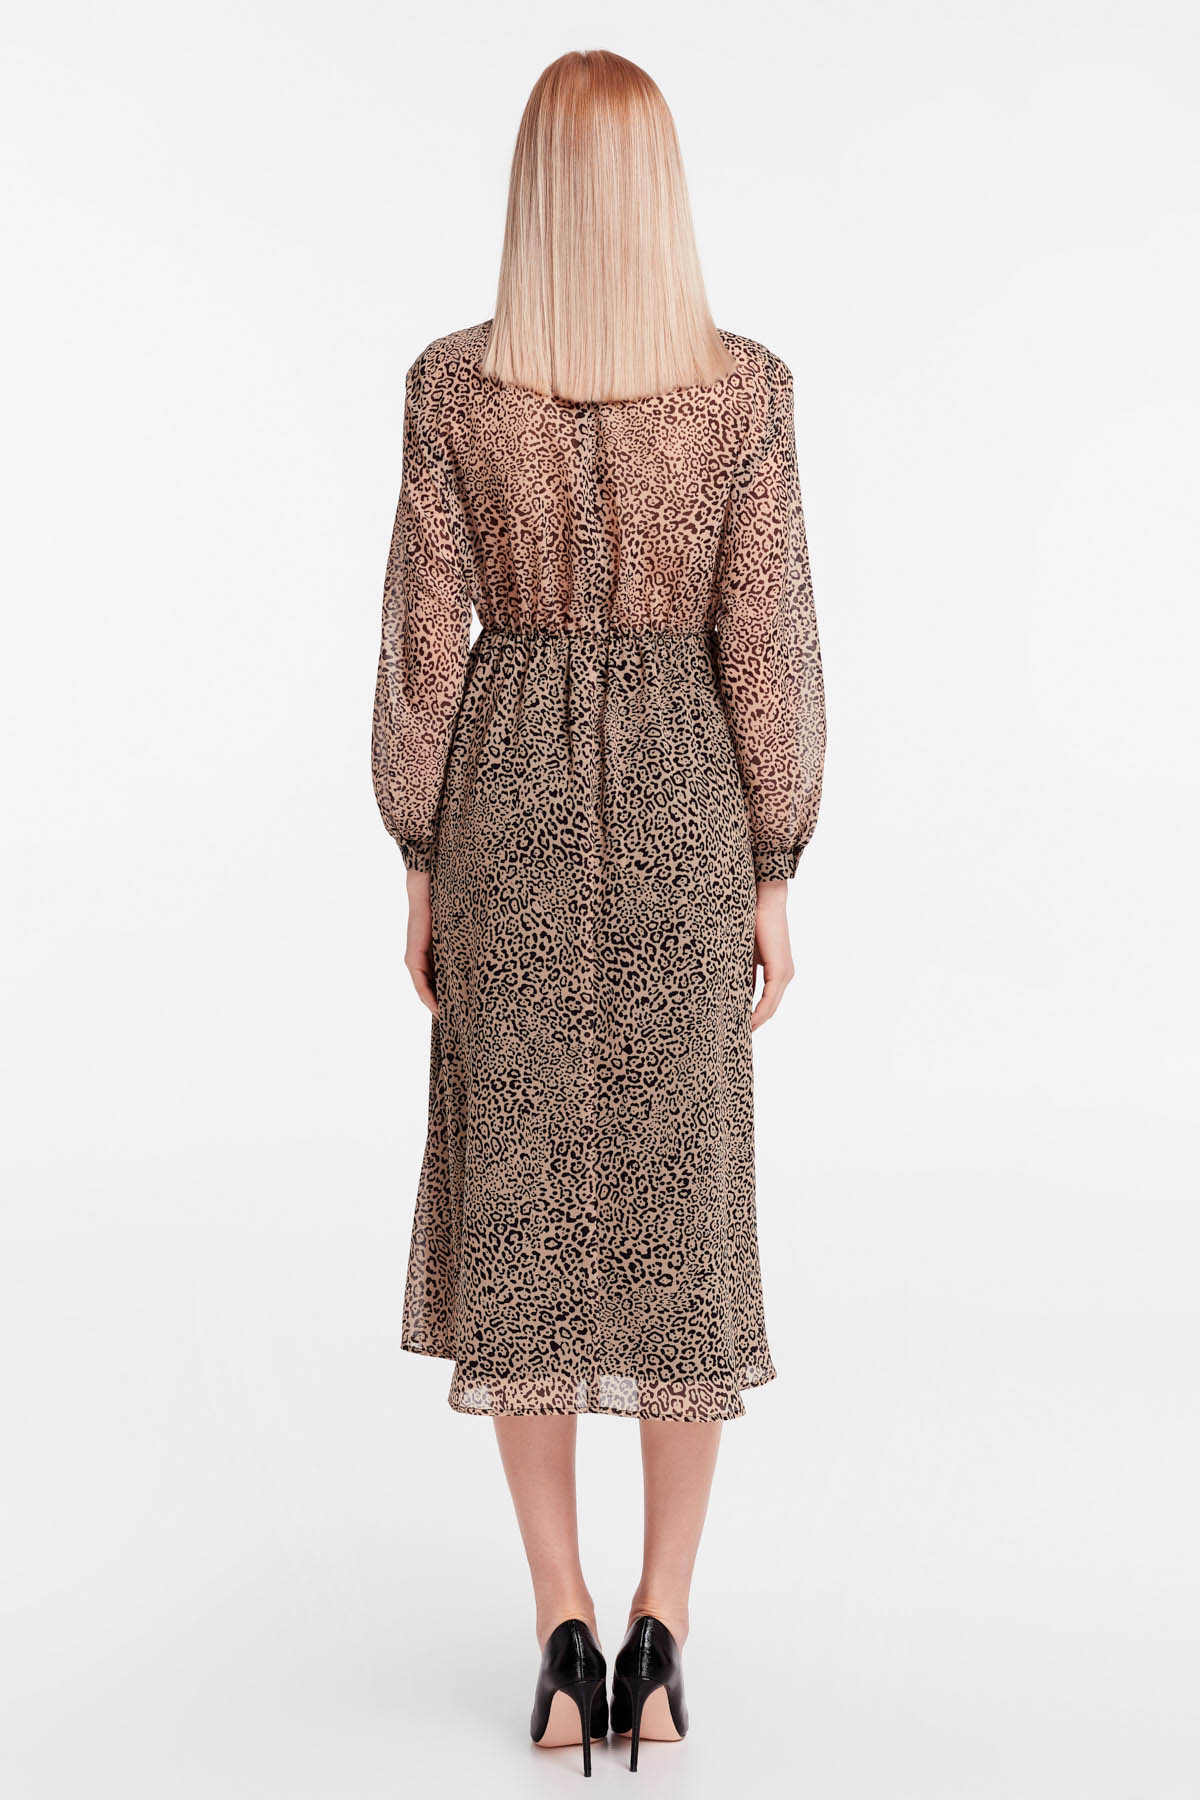 Midi dress with leopard print, photo 7